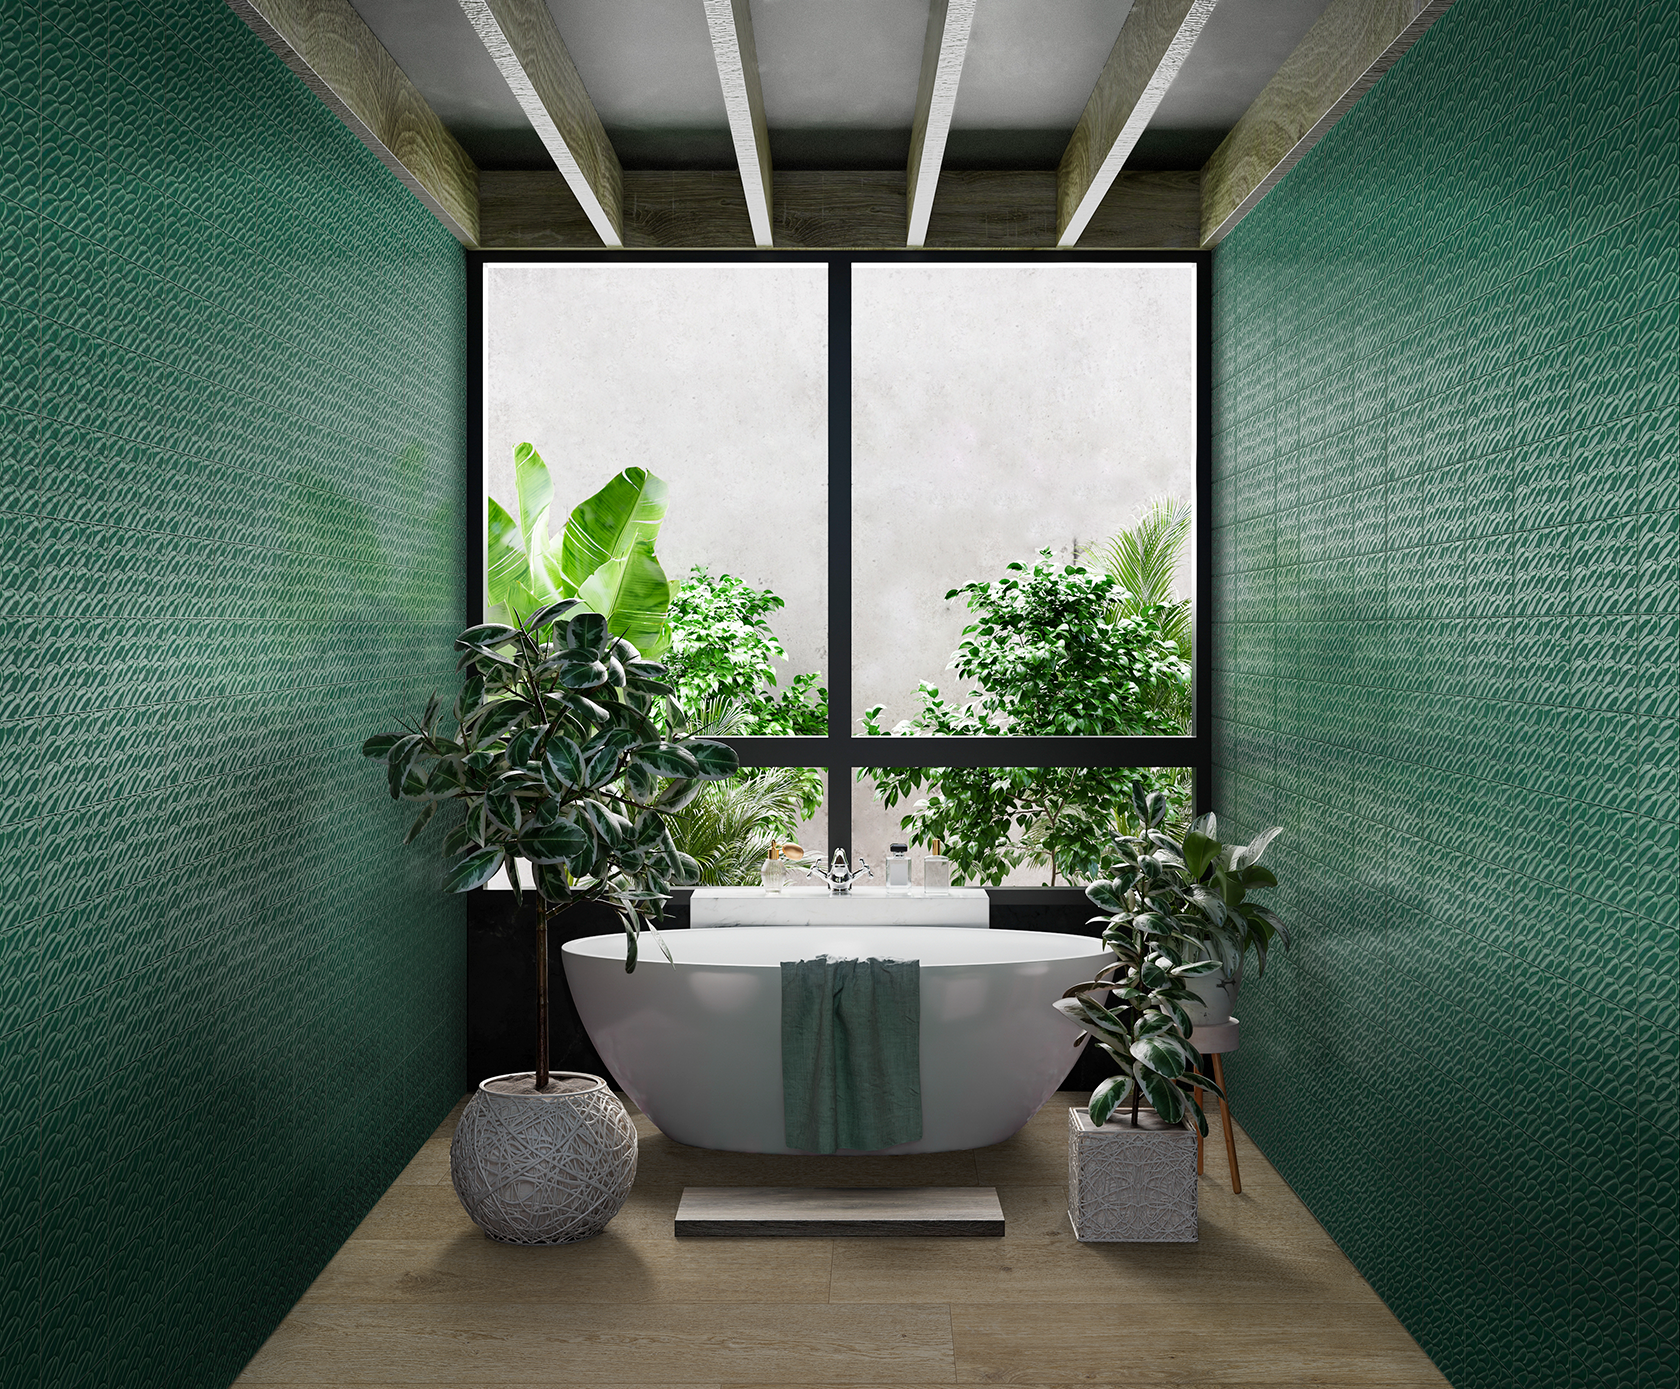 Malibu 6x6 Green Topango Glossy Deco Porcelain Wall Tile